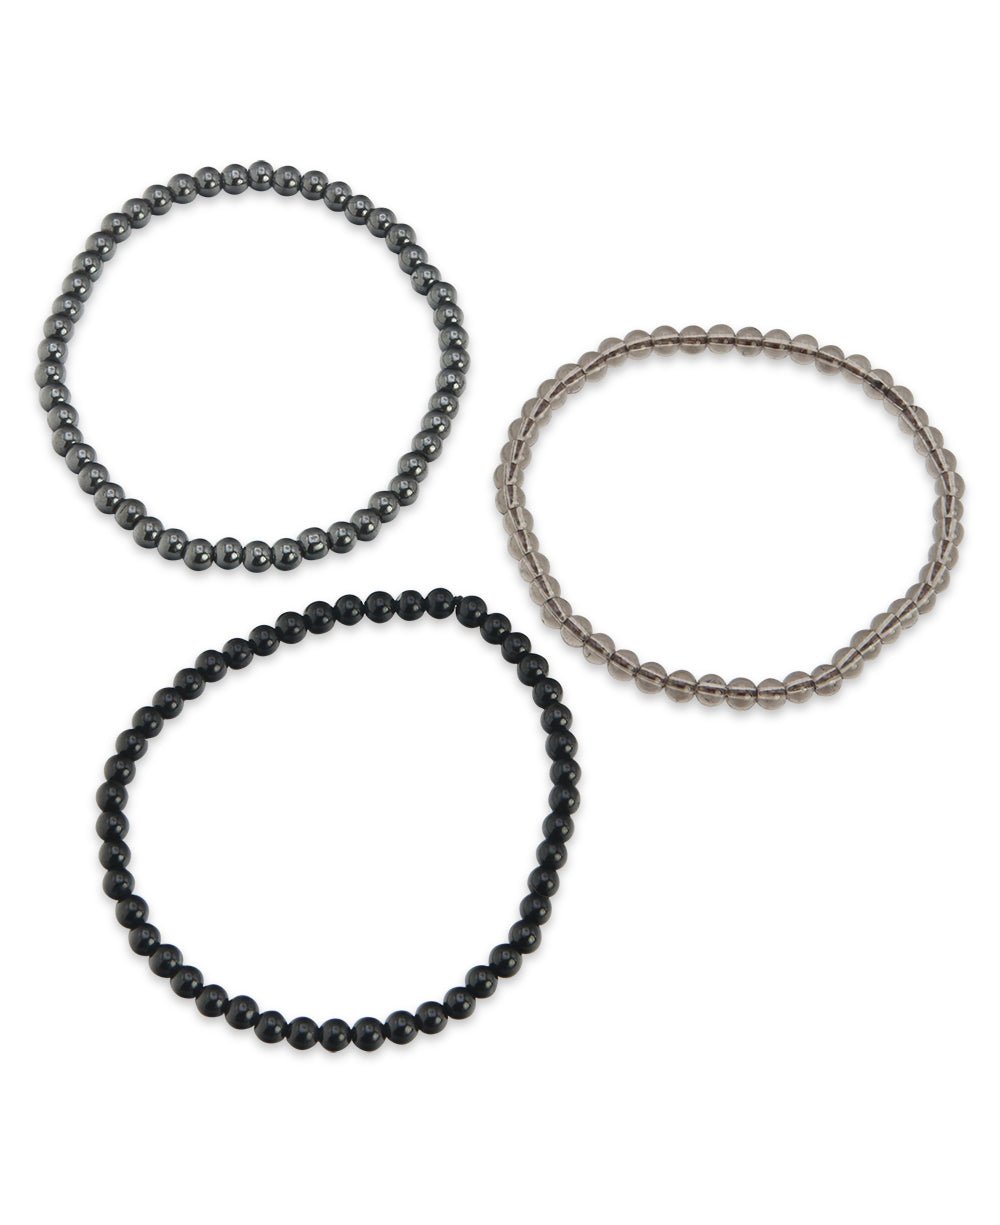 Energy Bracelets for Protection and Centering, Set of 3 - Bracelets